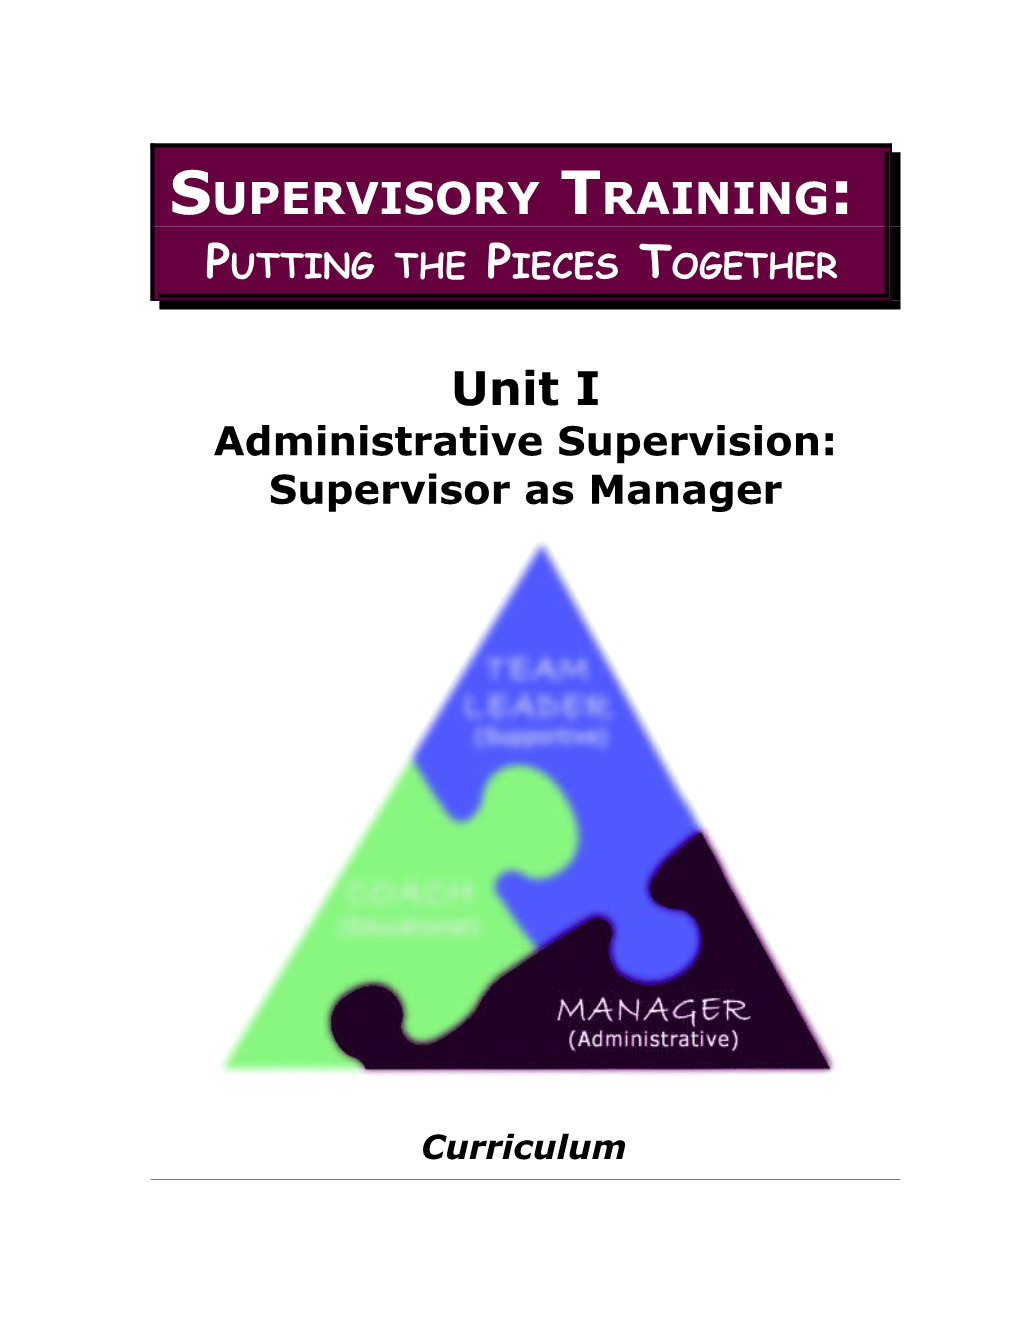 Unit I: Administrative Supervision